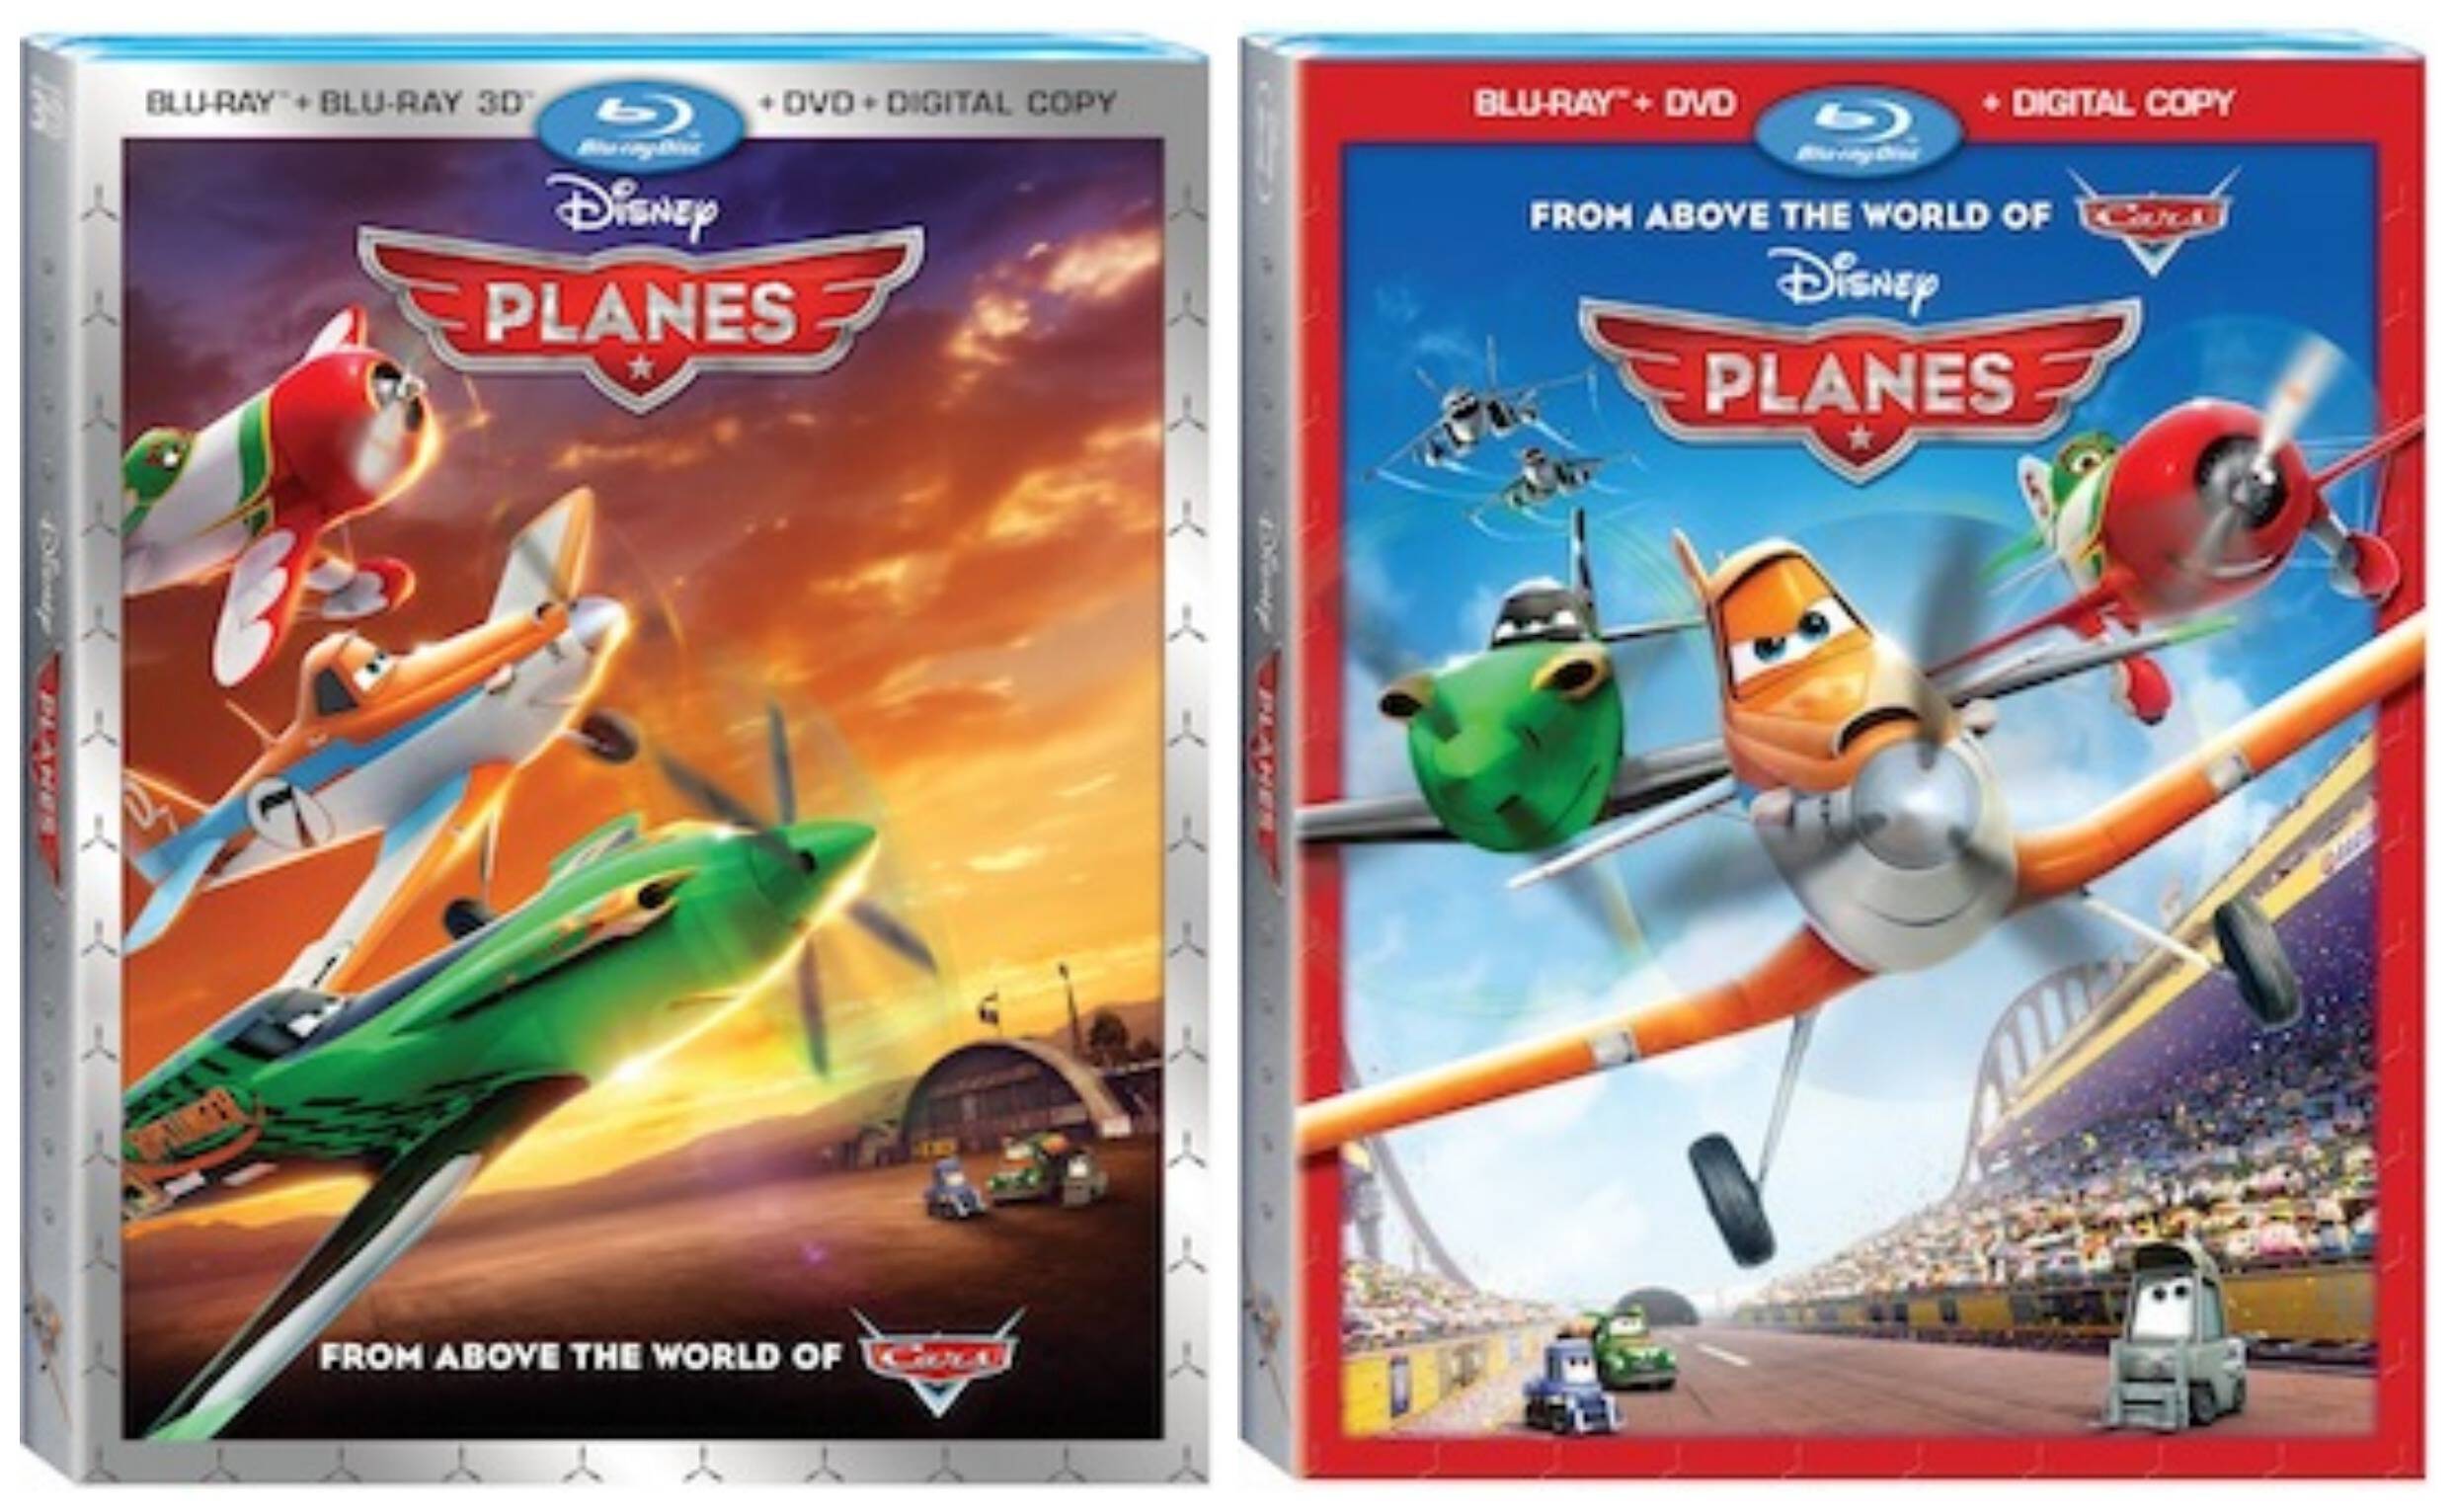 Disney Planes on Blu-Ray